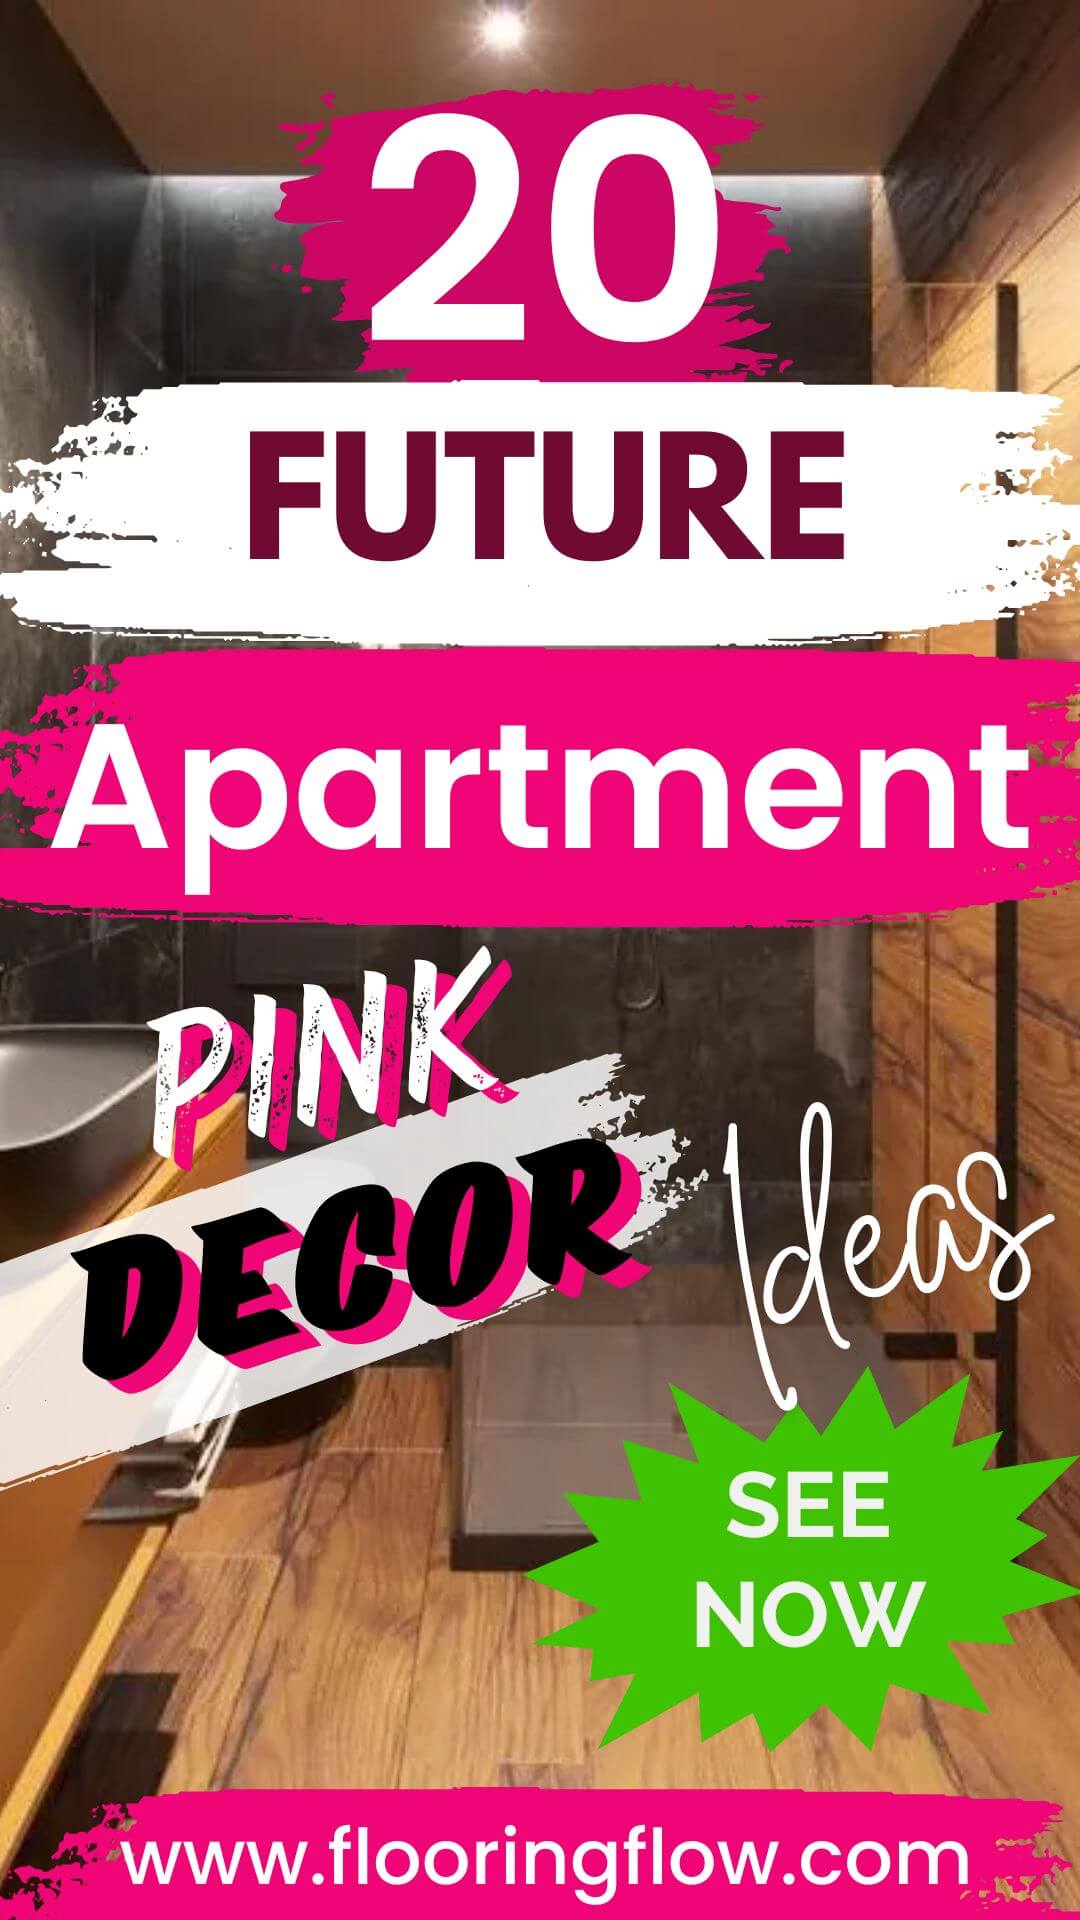 Future apartment decor in pink ideas